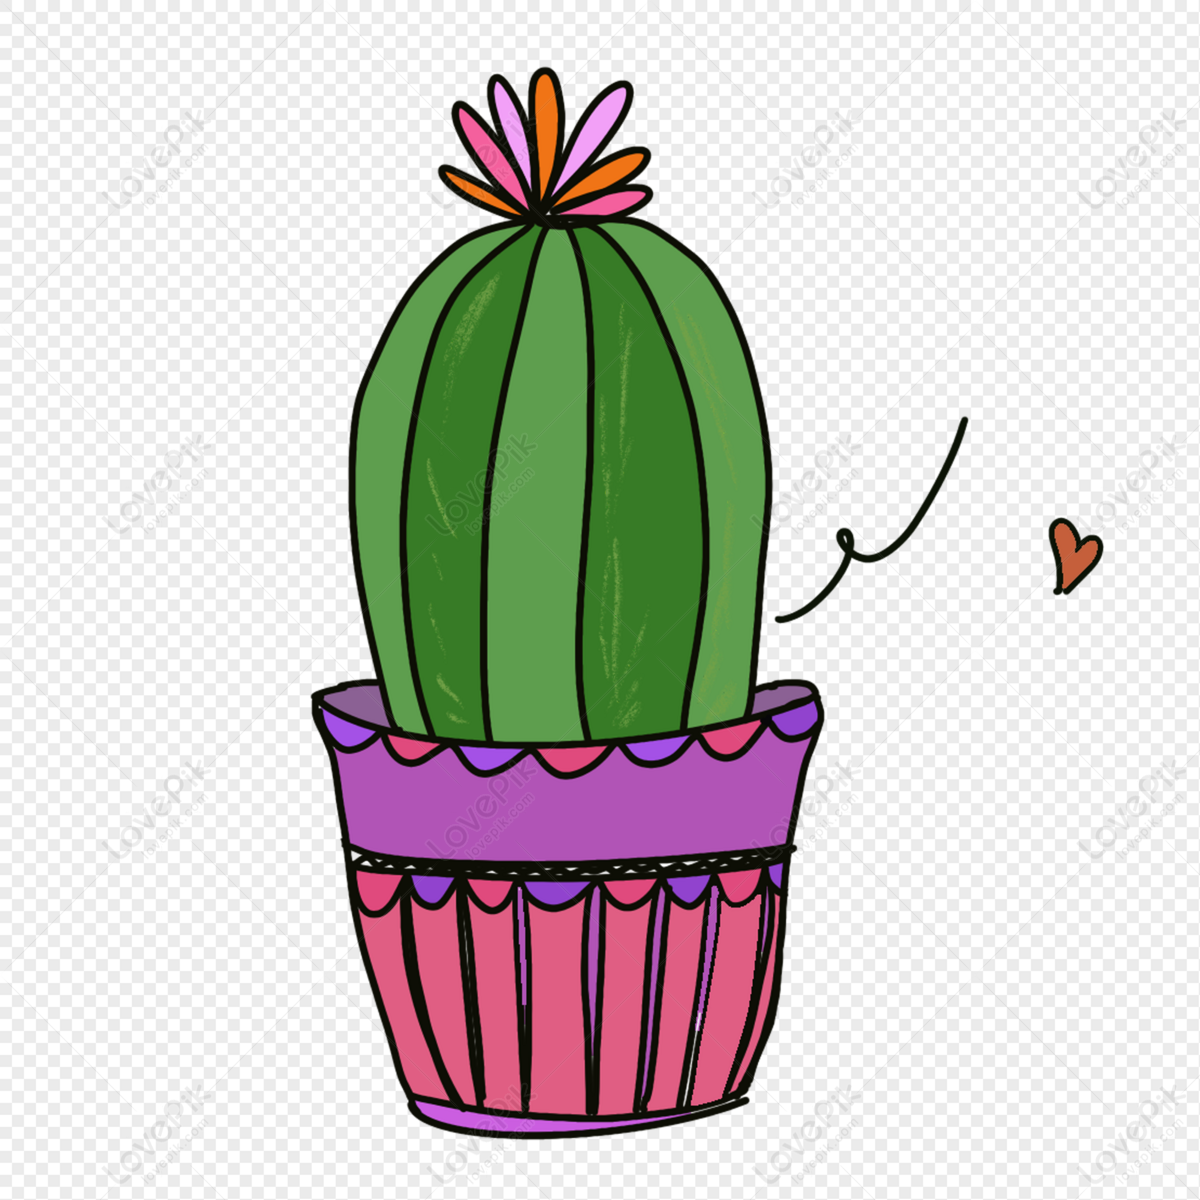 Cactus De Dibujos Animados Dibujados A Mano PNG Imágenes Gratis - Lovepik